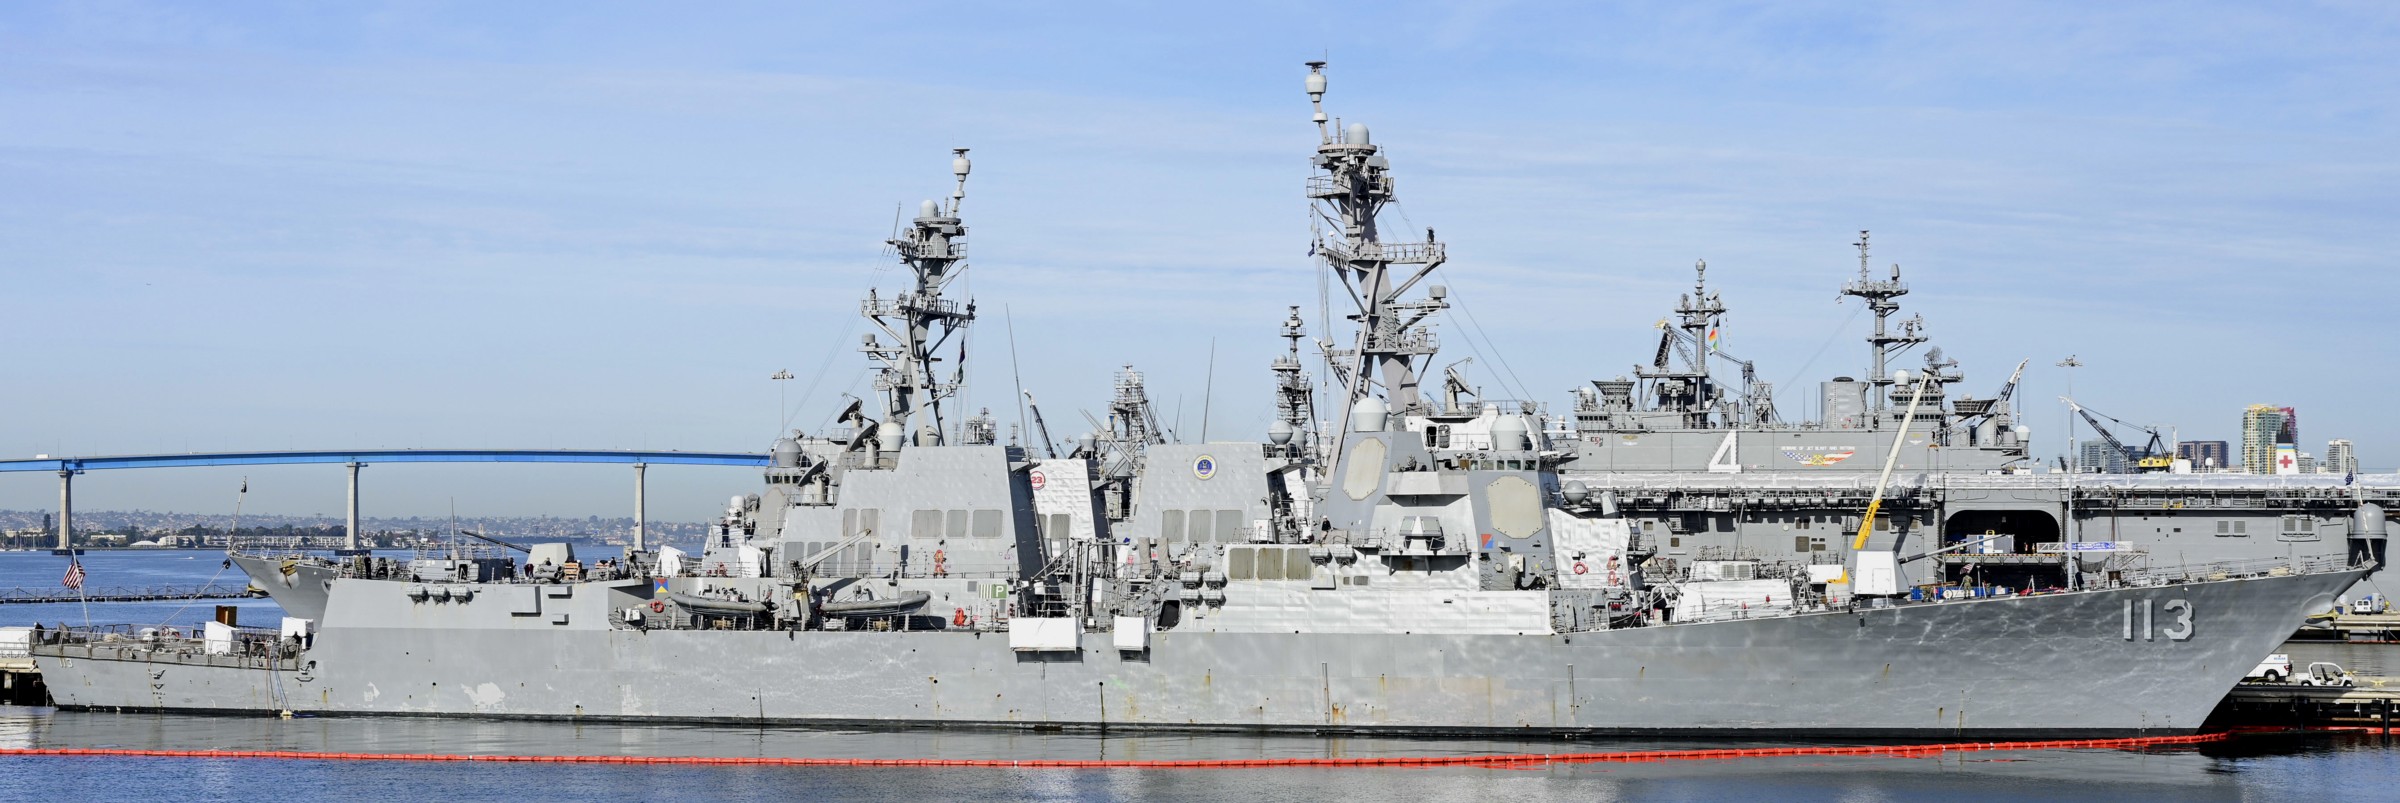 ddg-113 uss john finn arleigh burke class guided missile destroyer aegis us navy san diego california 60